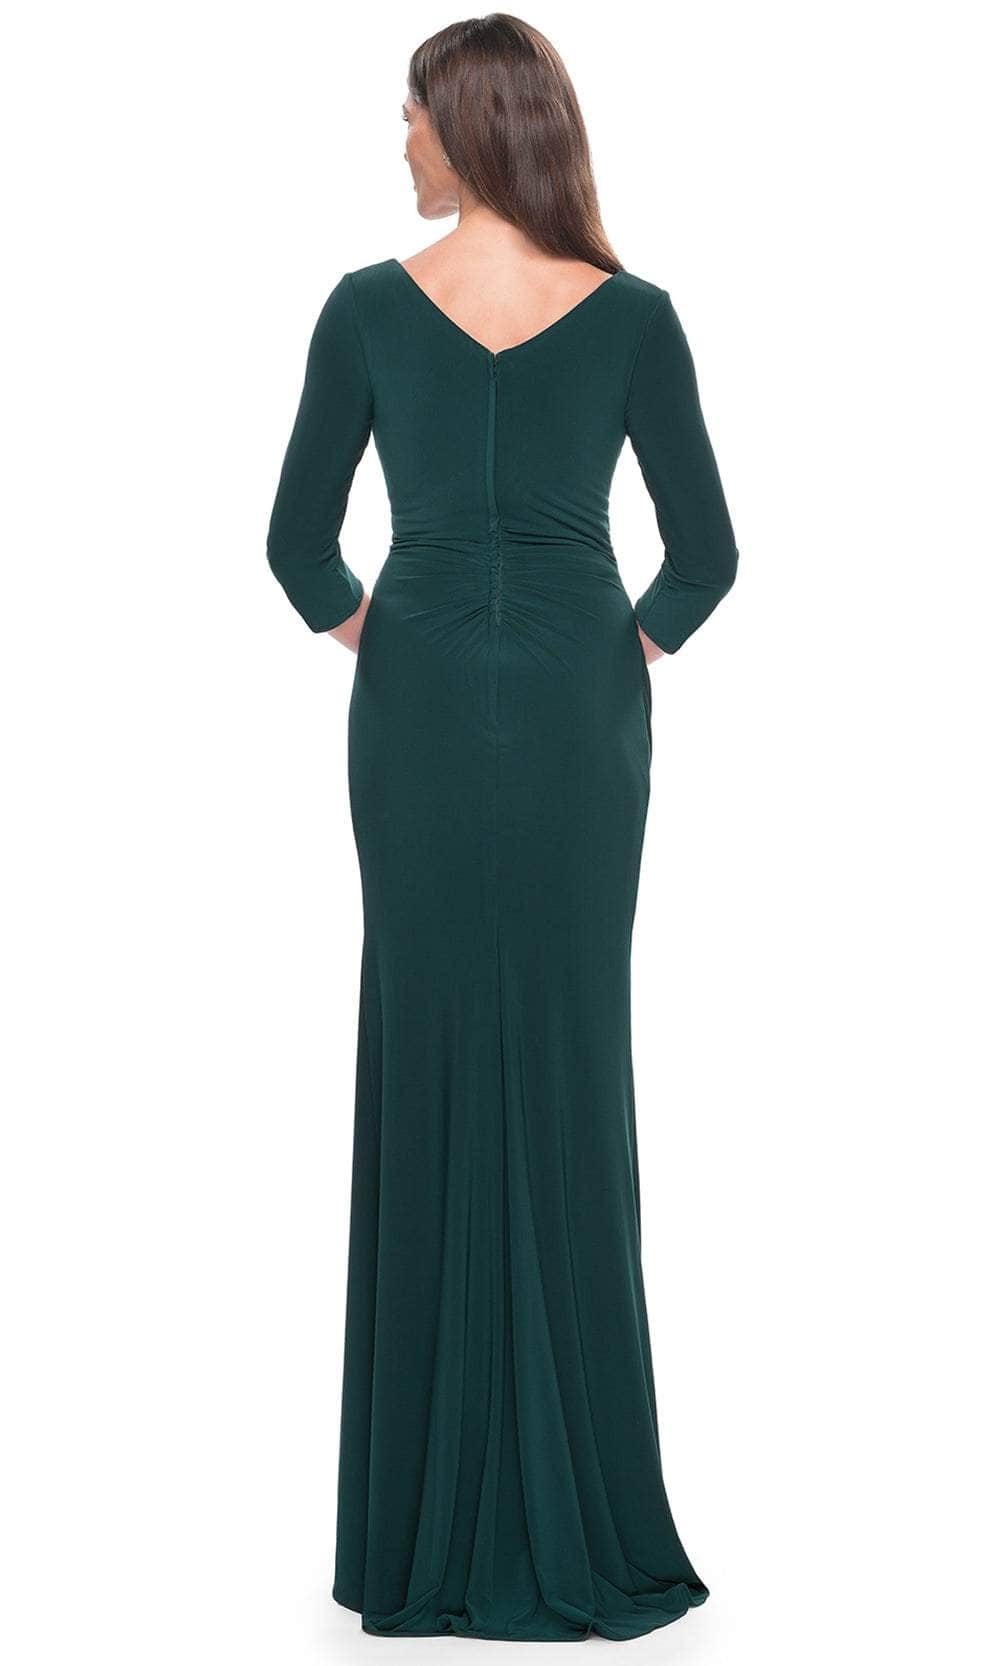 La Femme 31020 - Wrap Jersey Evening Dress Evening Dresses